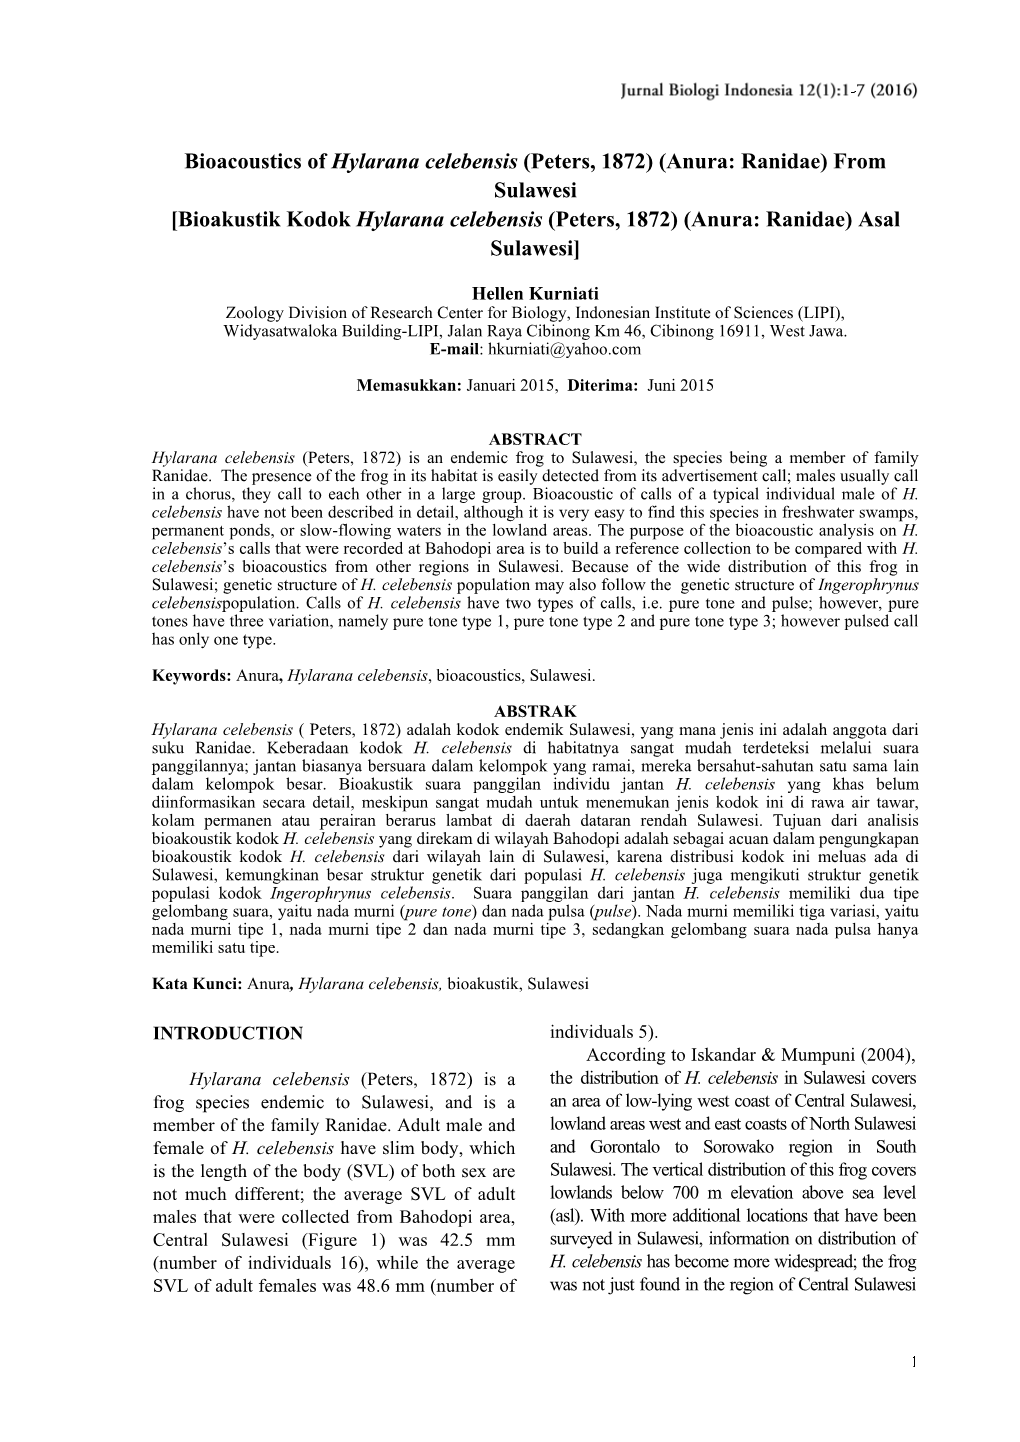 Bioacoustics of Hylarana Celebensis